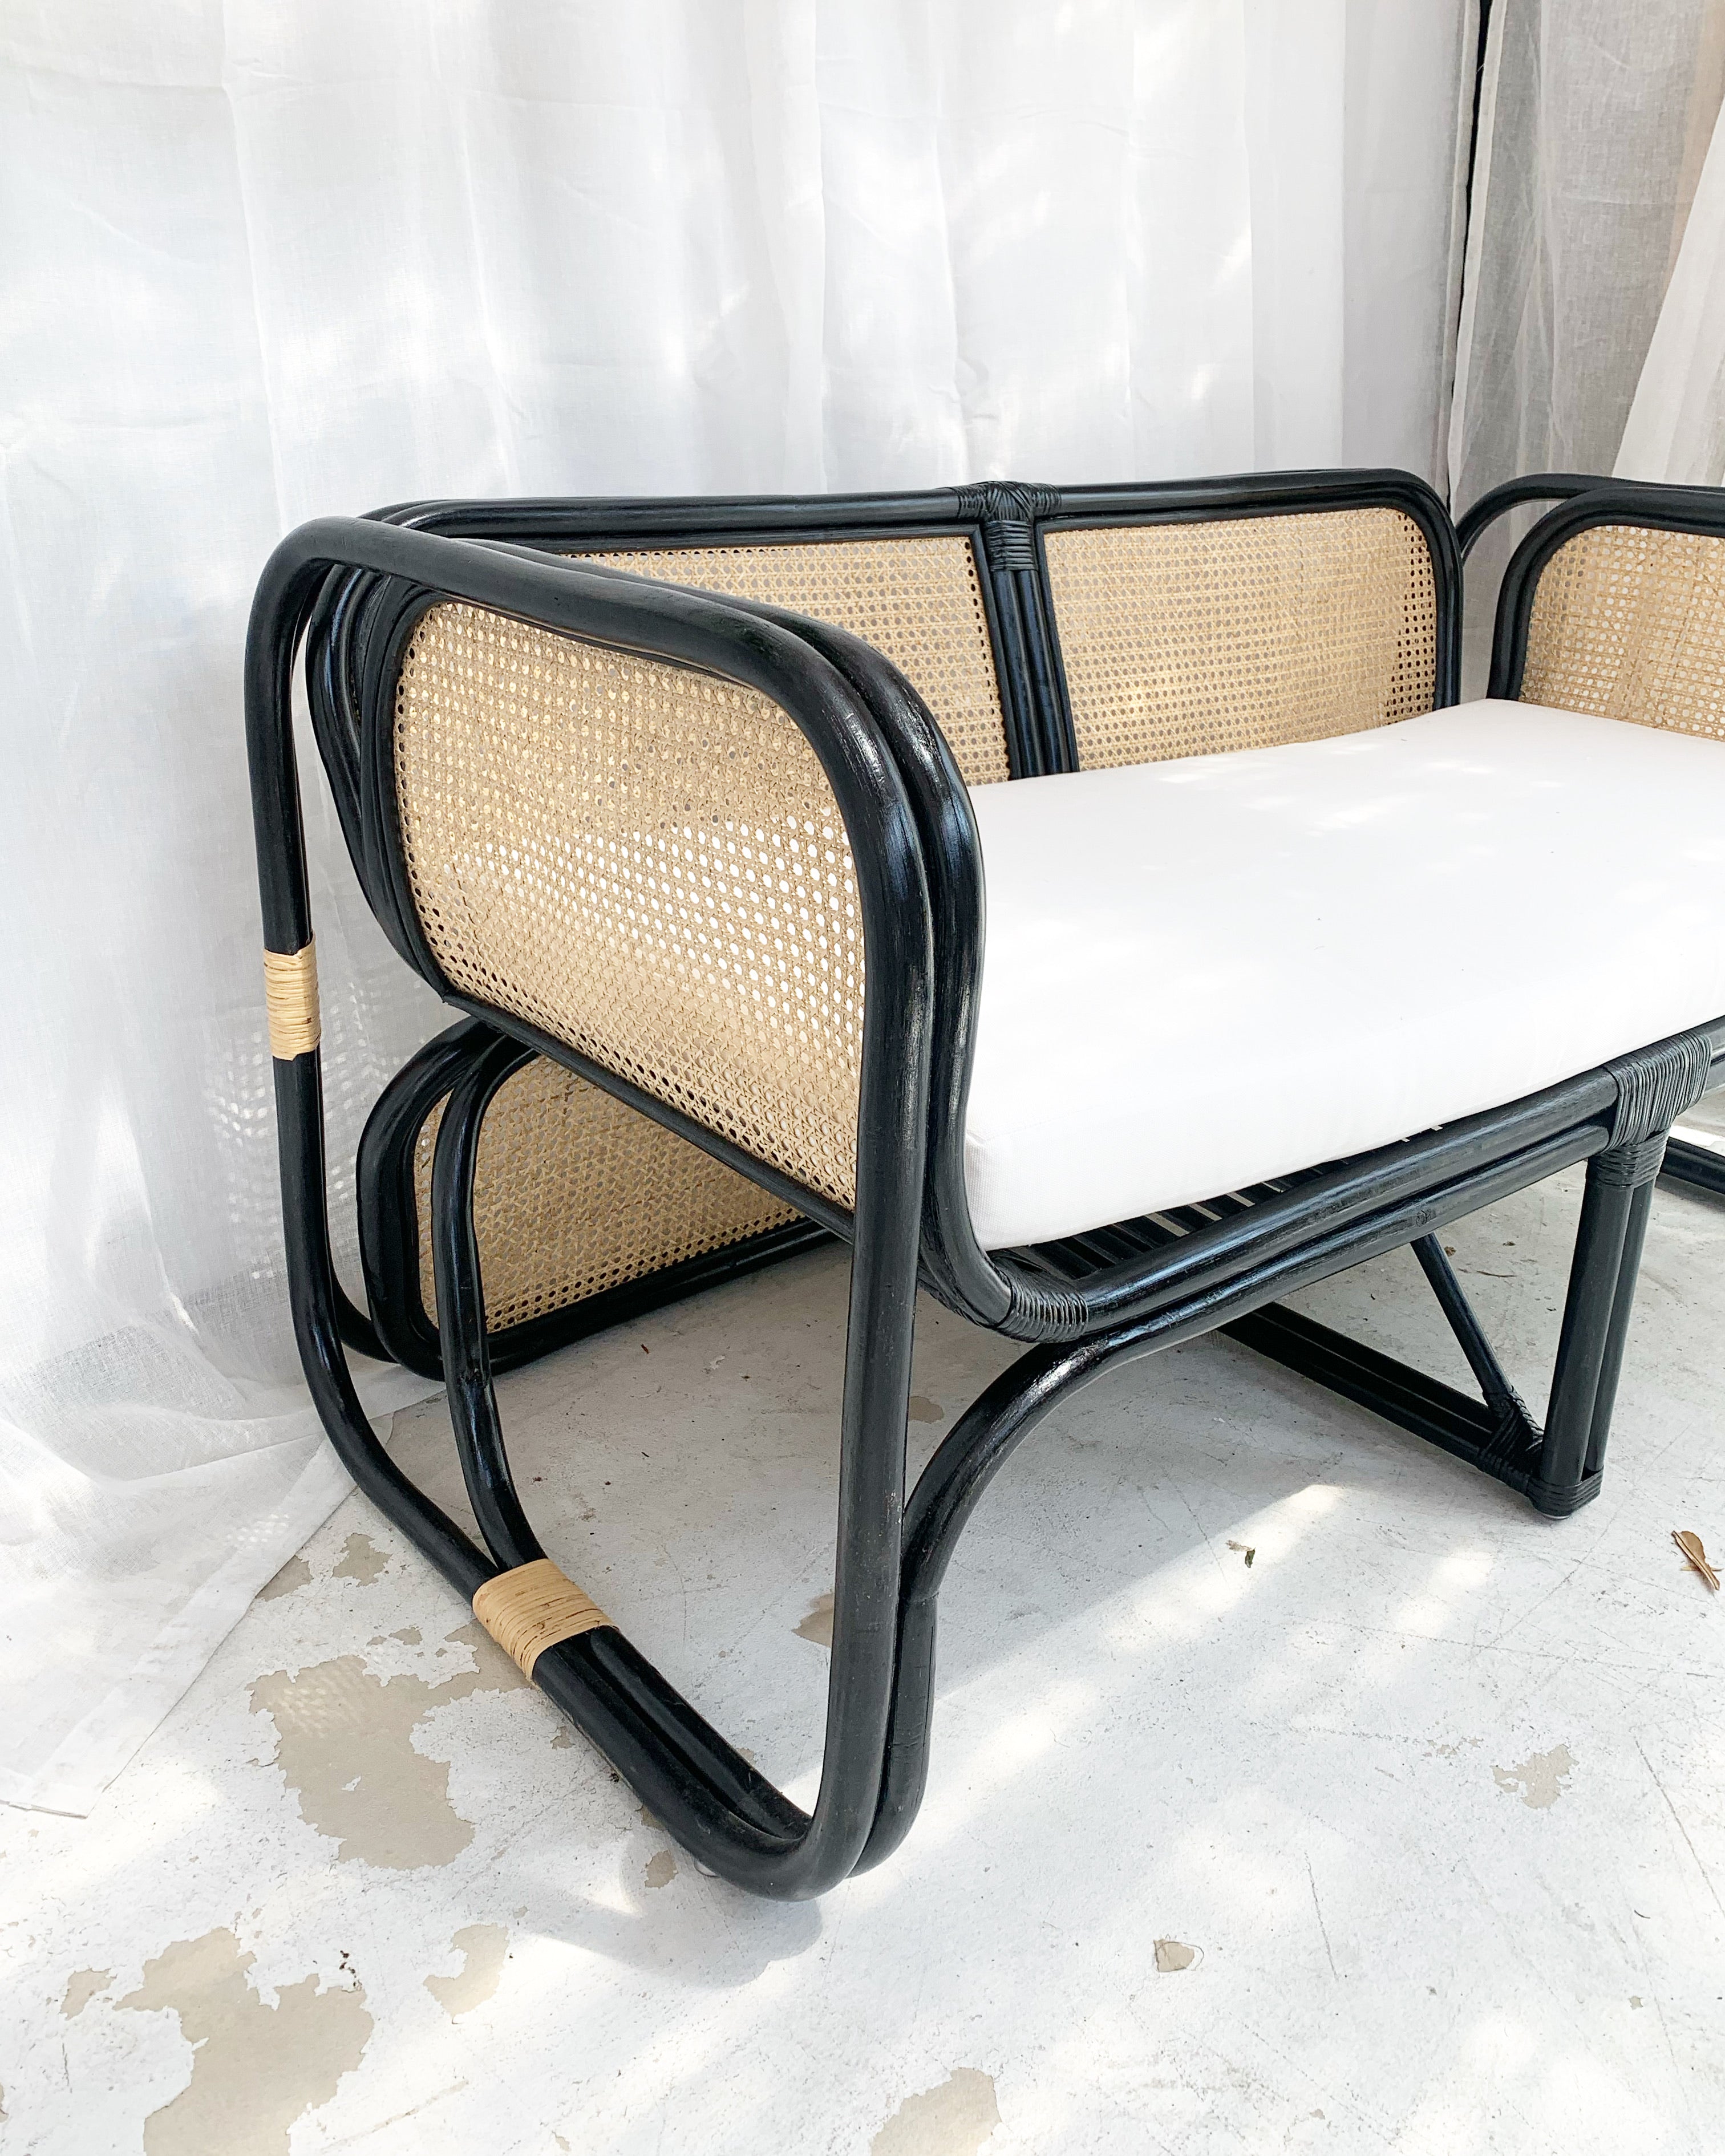 Just Landed- Cypress Cane Rattan Love Seat Sofa - Natural/Black Frame ...